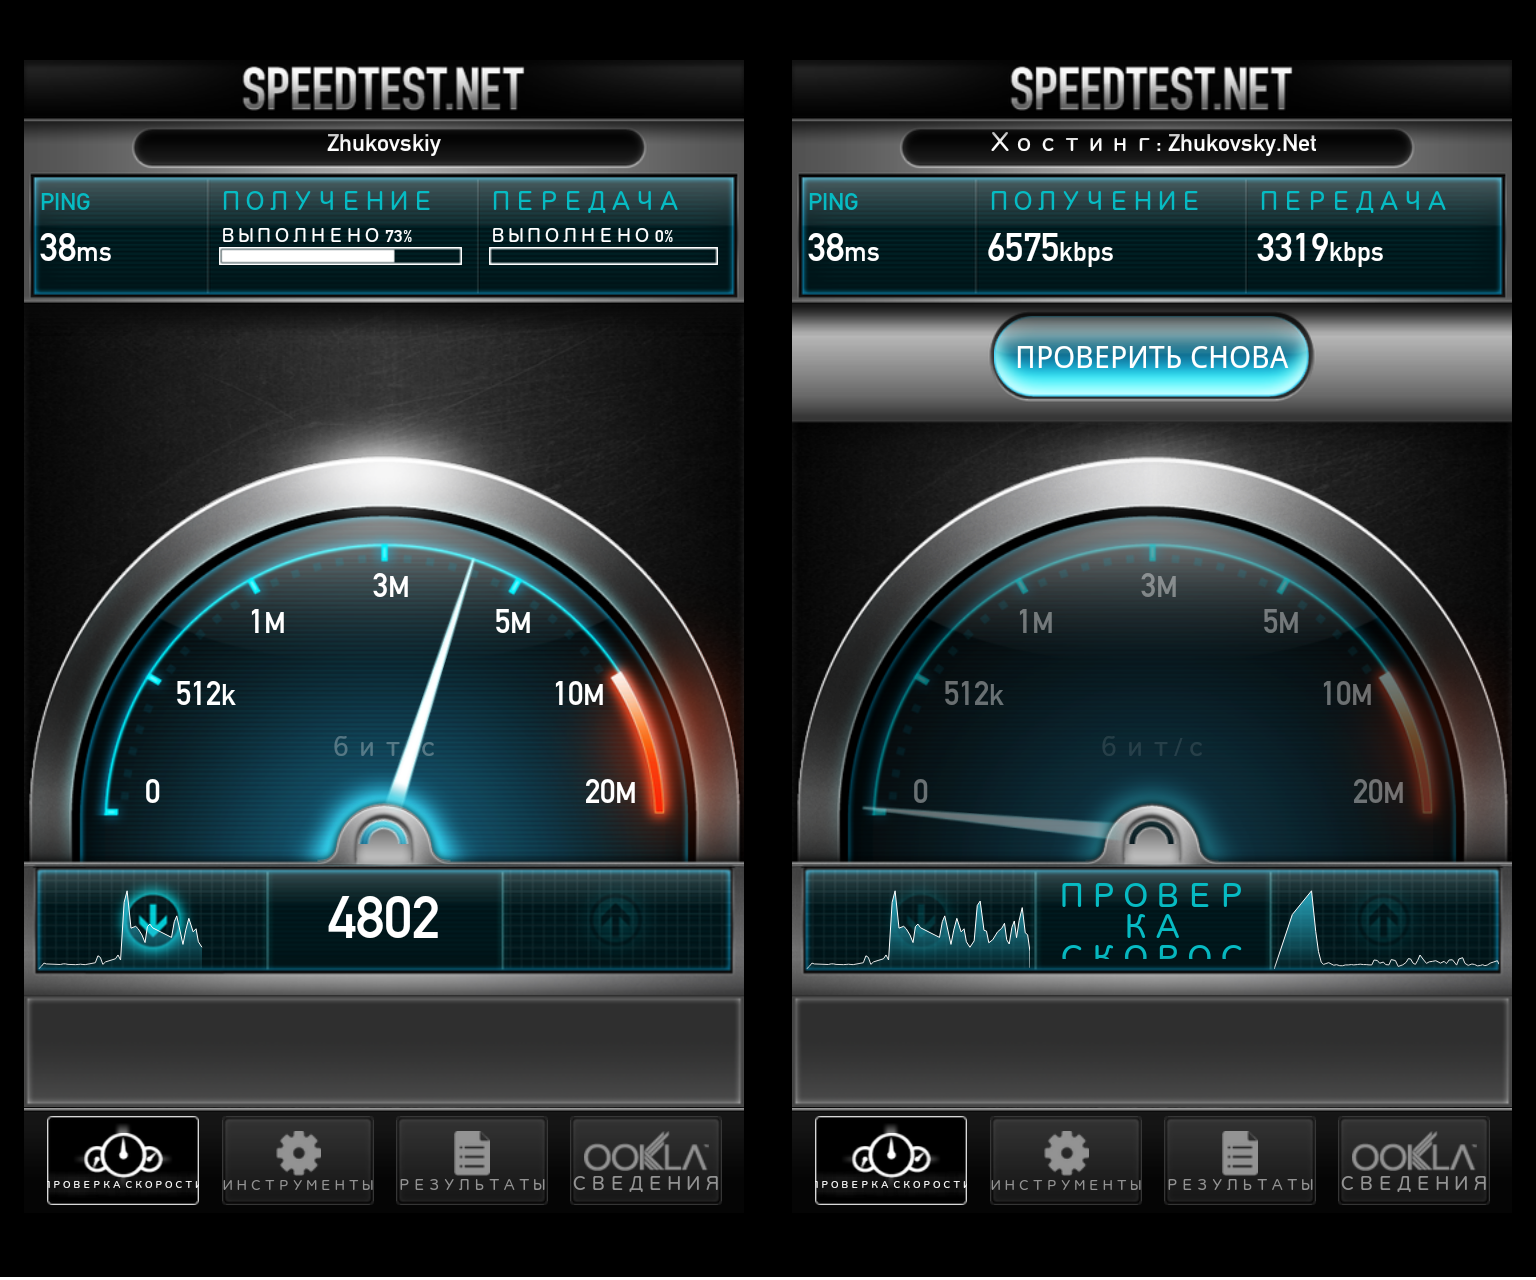 Андроид тест интернета. Speedtest скорость. Скрин скорости интернета. Тест скорости интернета.